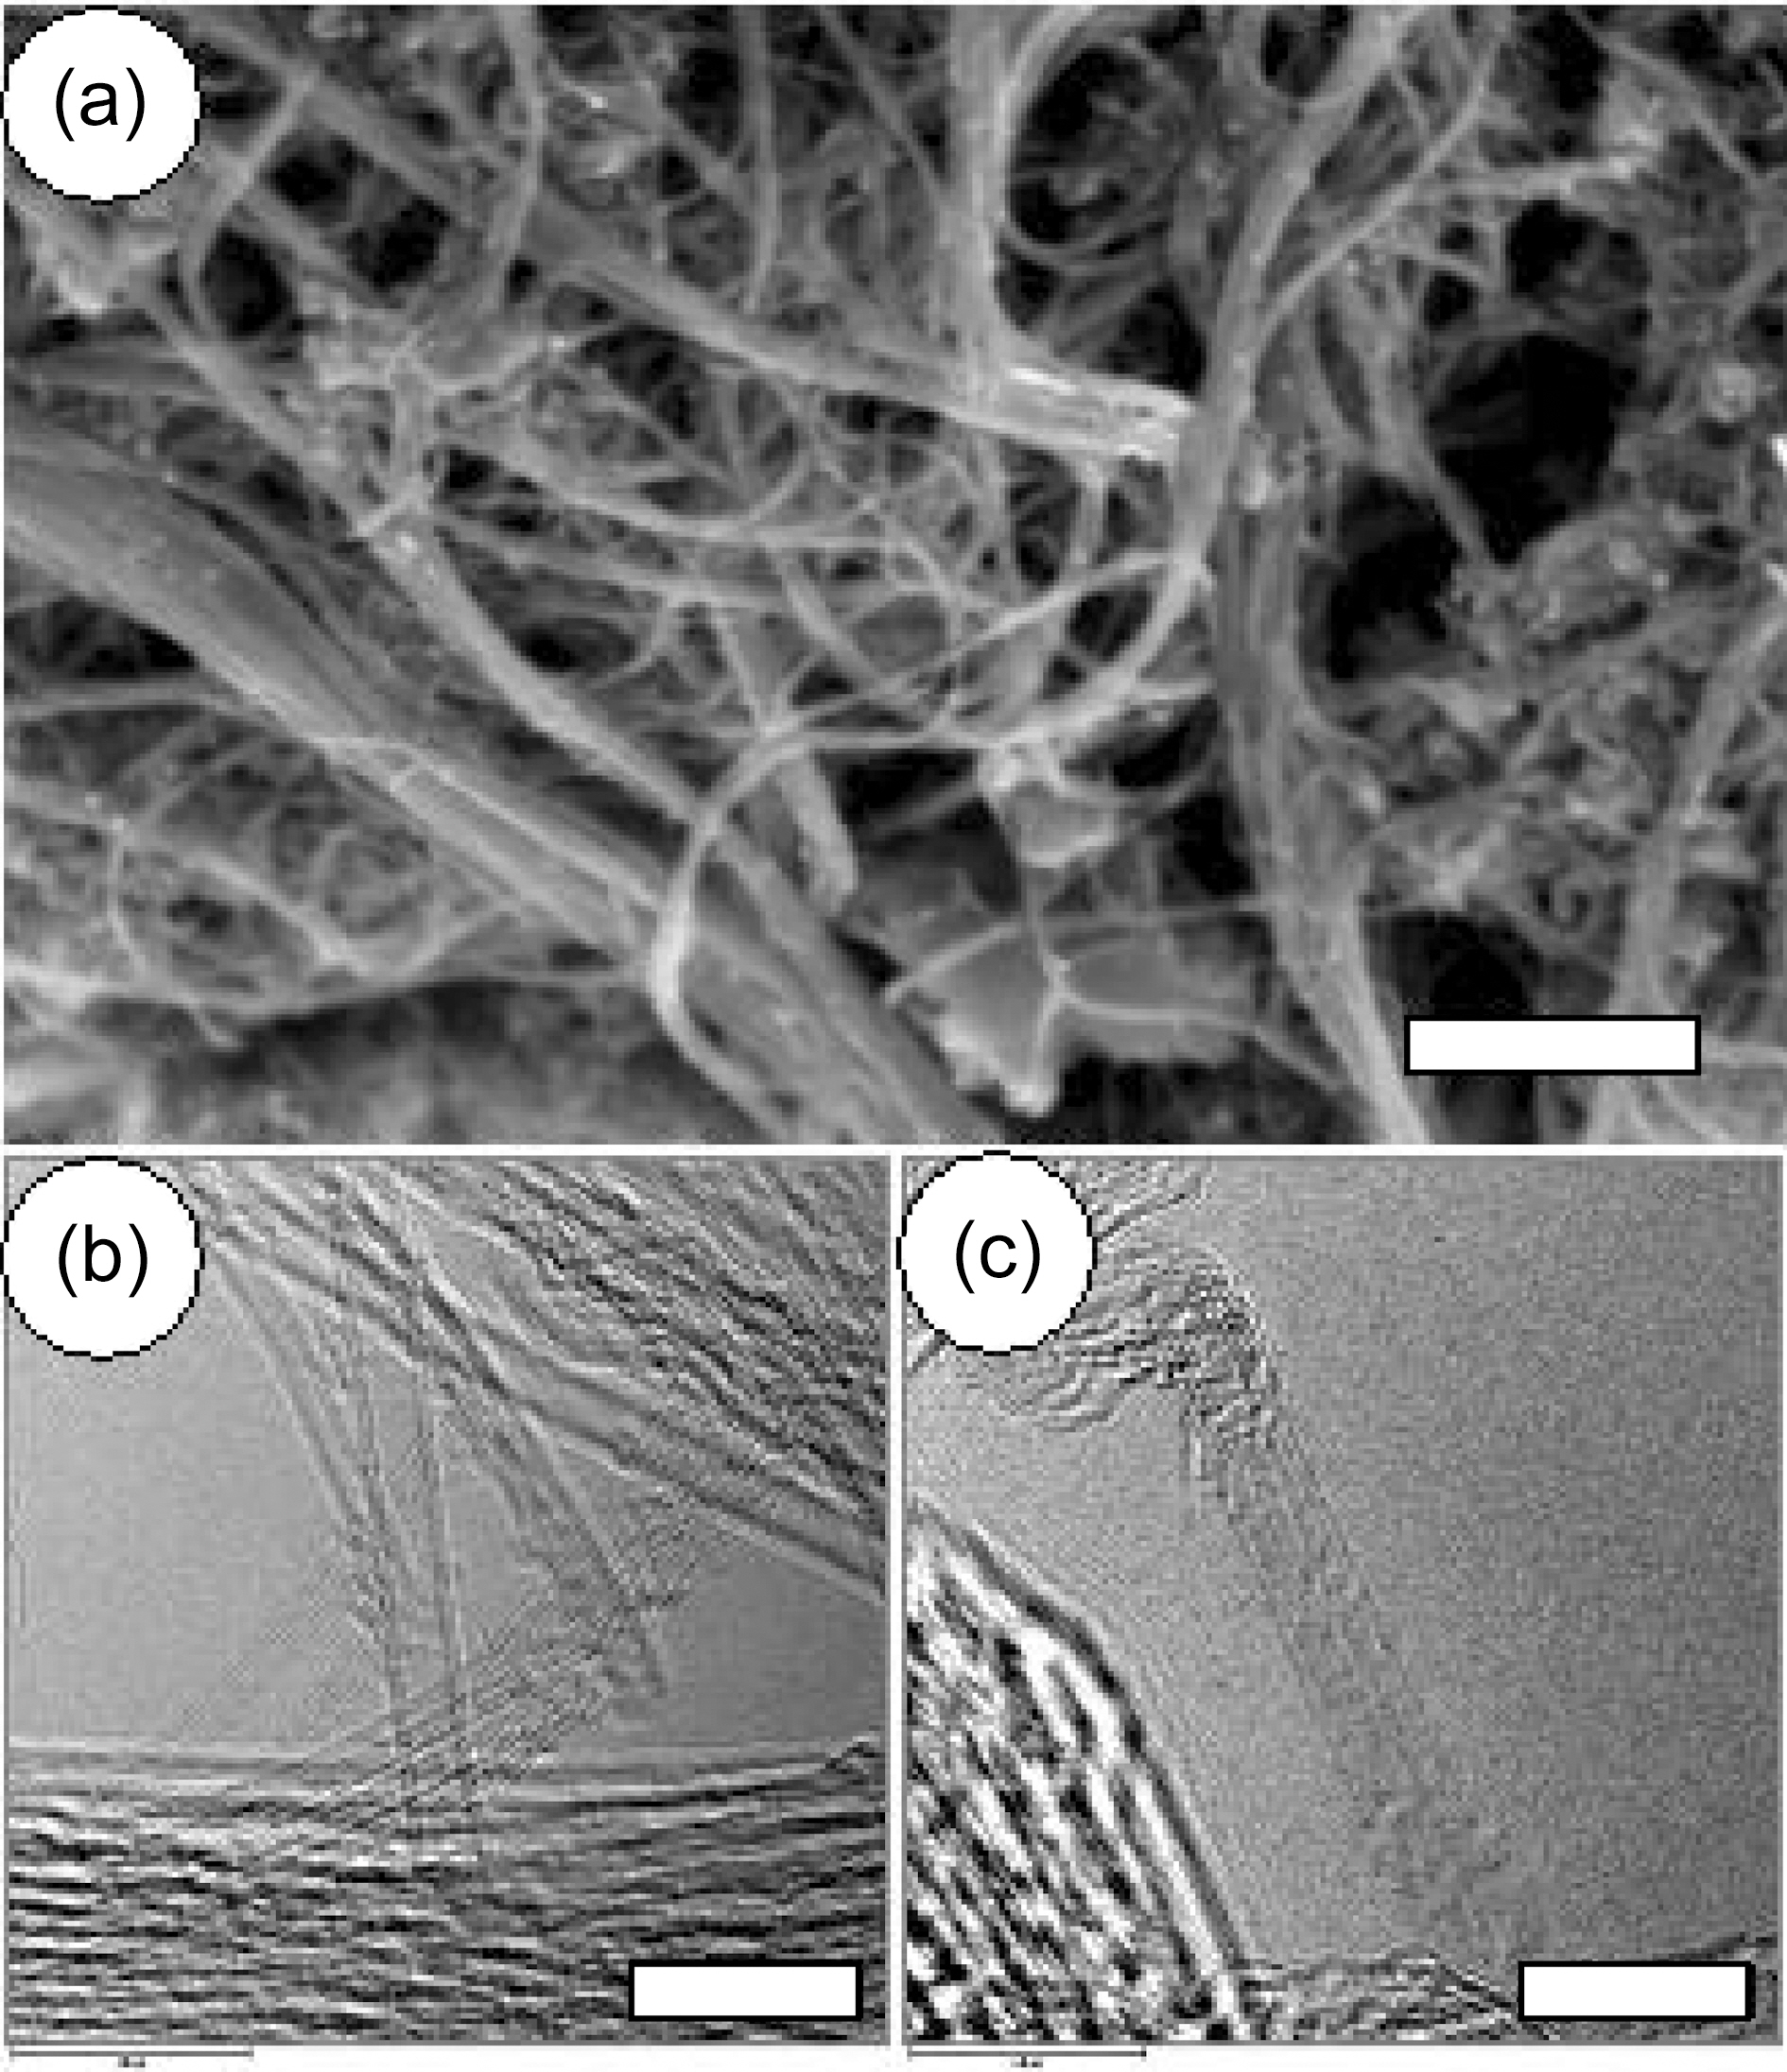 (a) SEM image of carbon nanotubes (scale bar: 200 nm). (bc) TEM image of carbon nanotubes (scale bars: 10 nm).